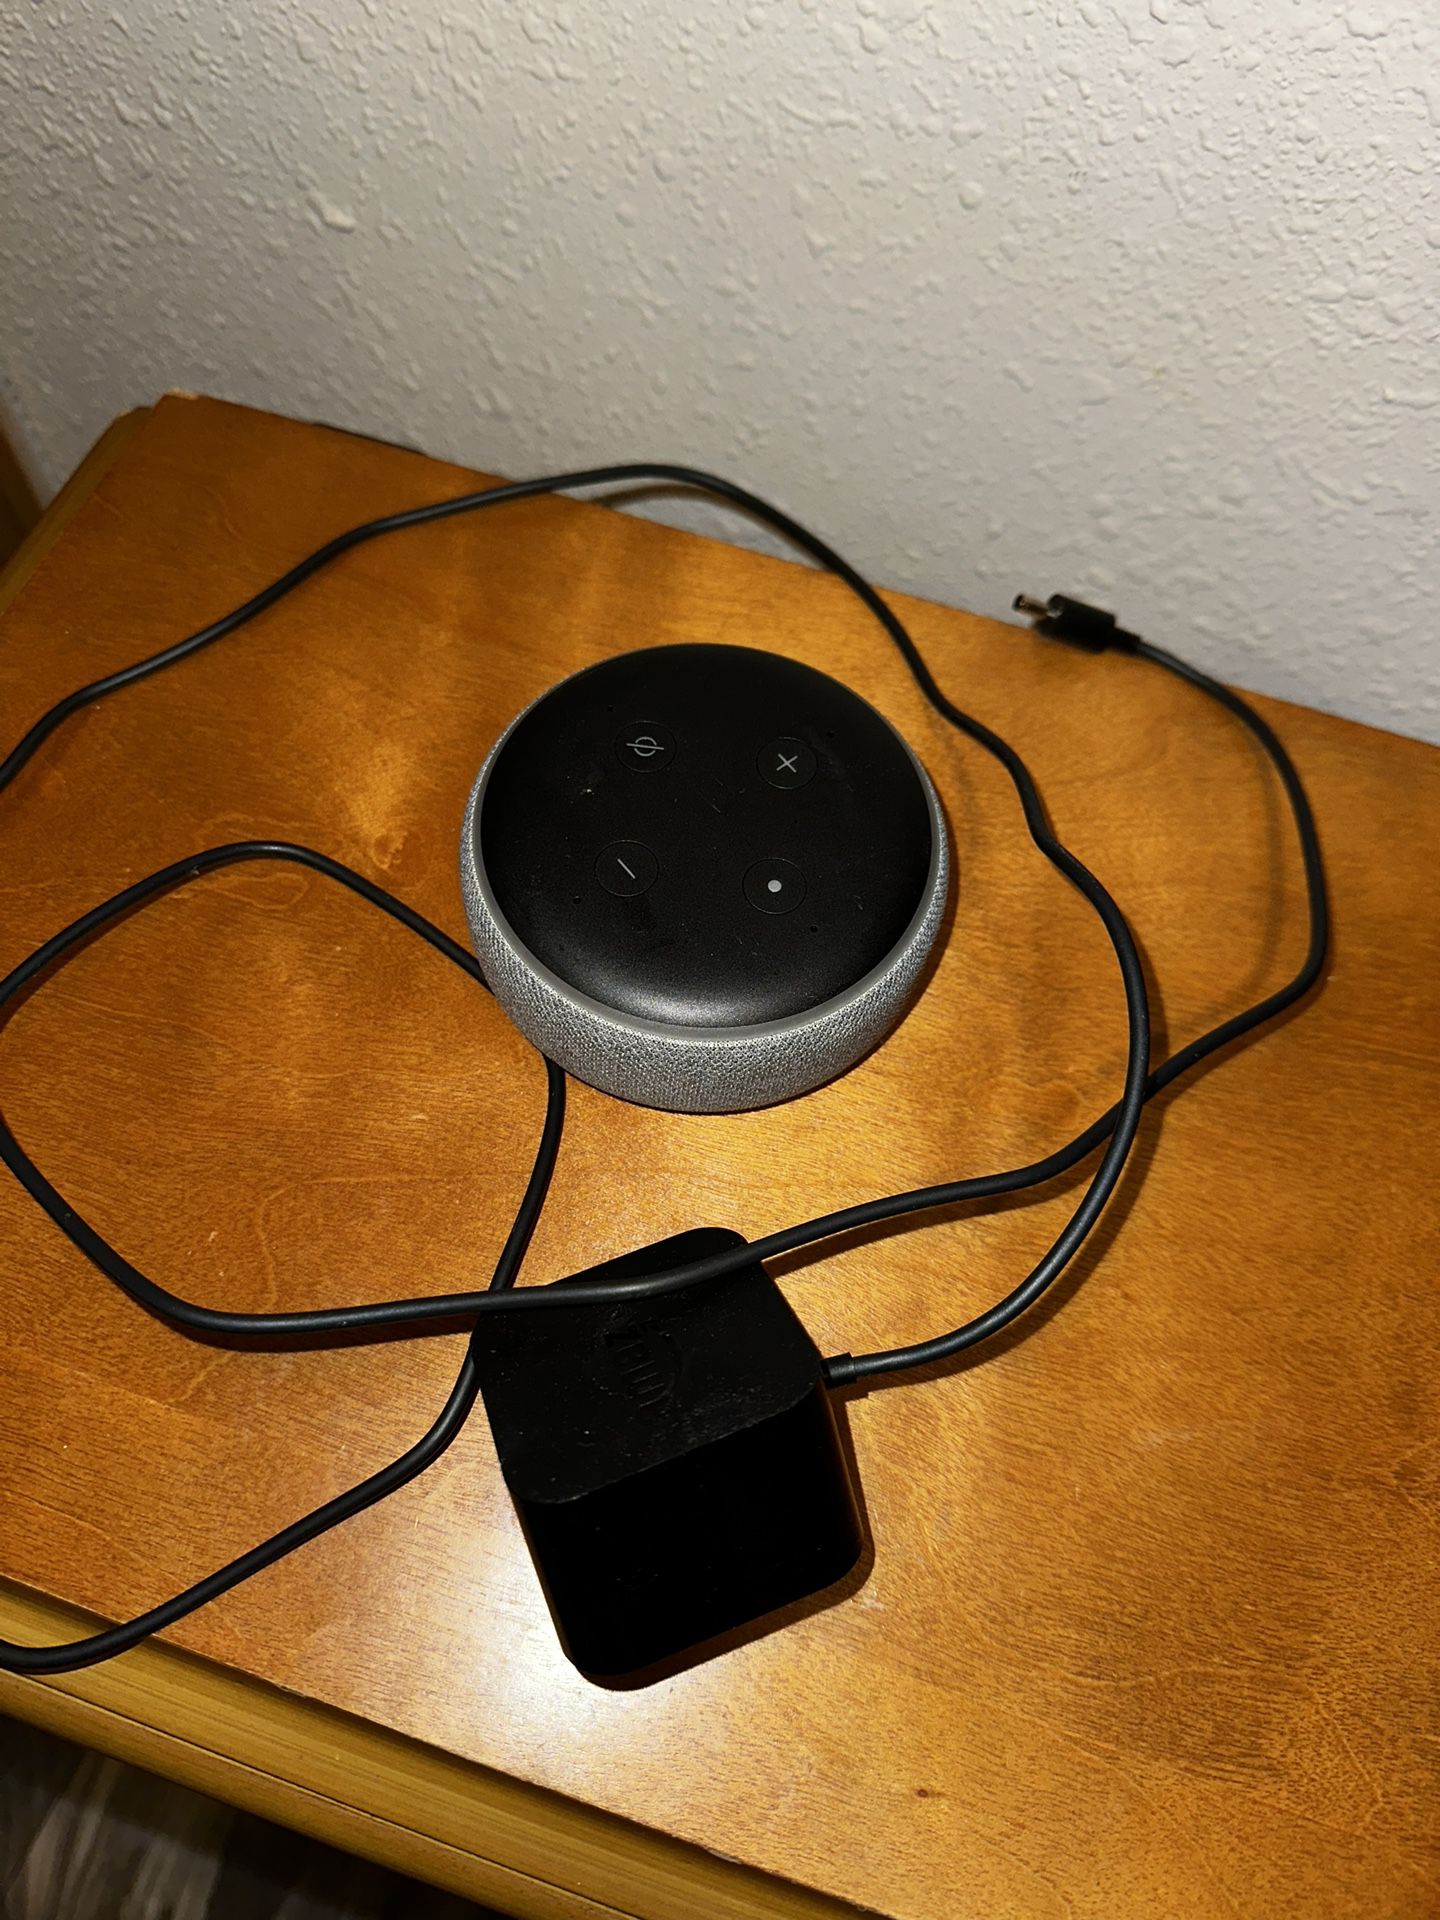 Amazon Alexa Echo Dot